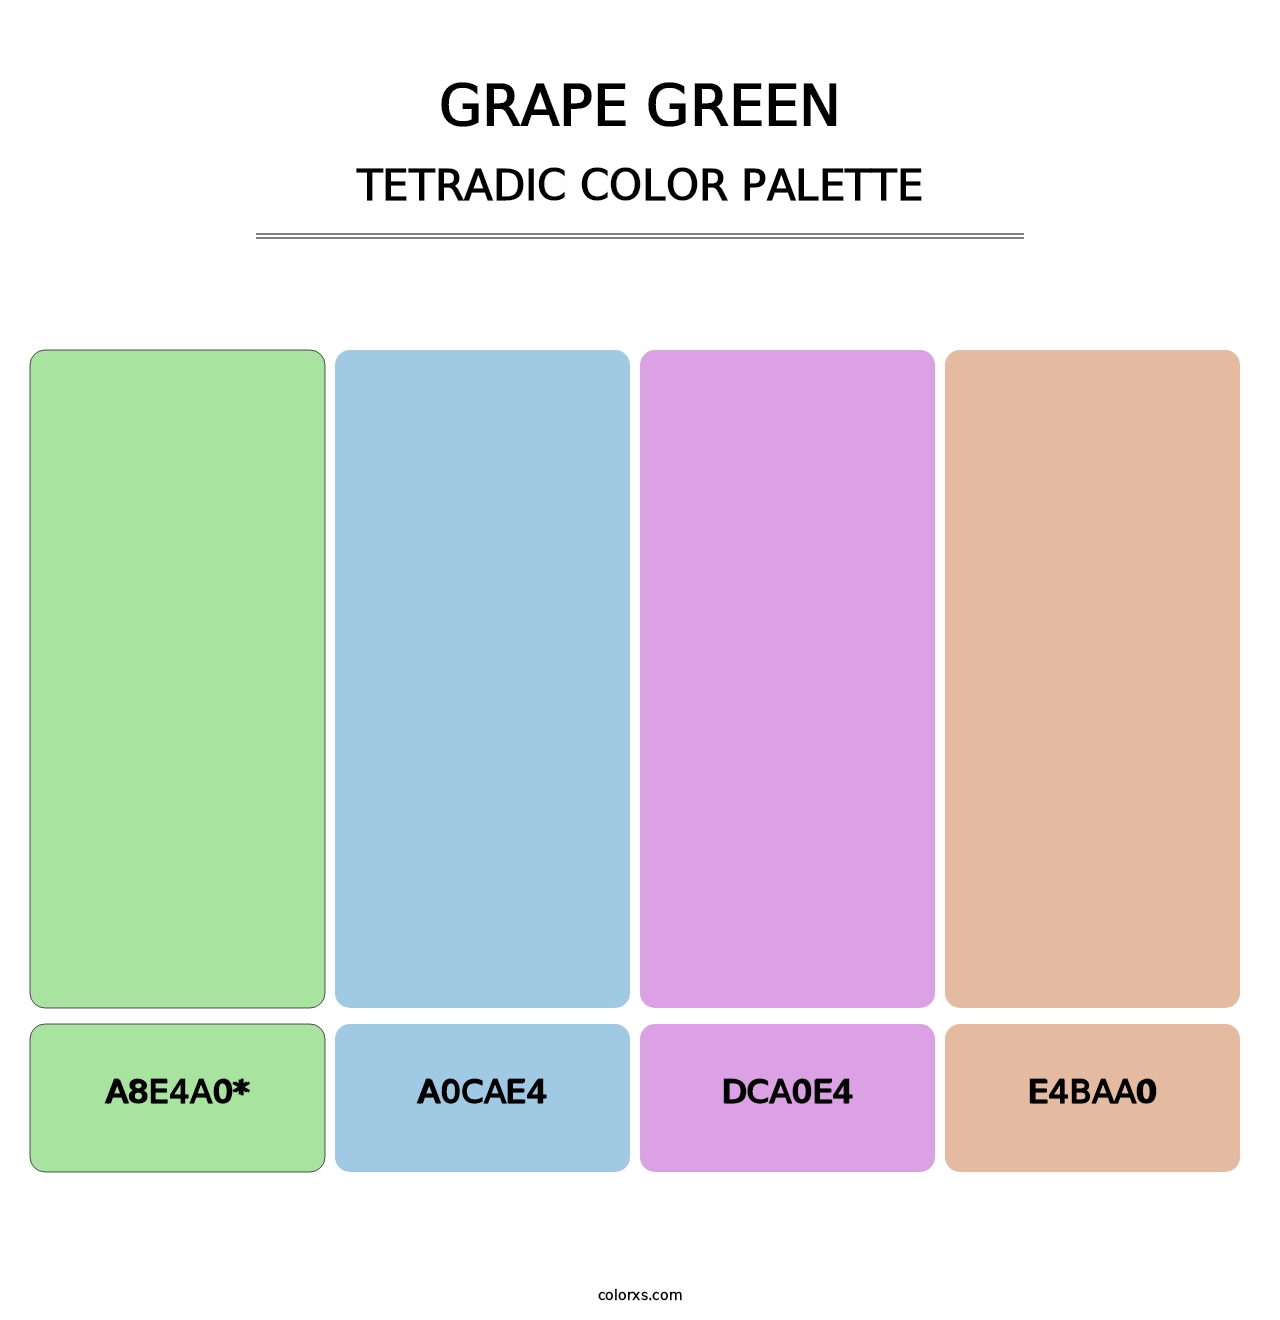 Grape Green - Tetradic Color Palette